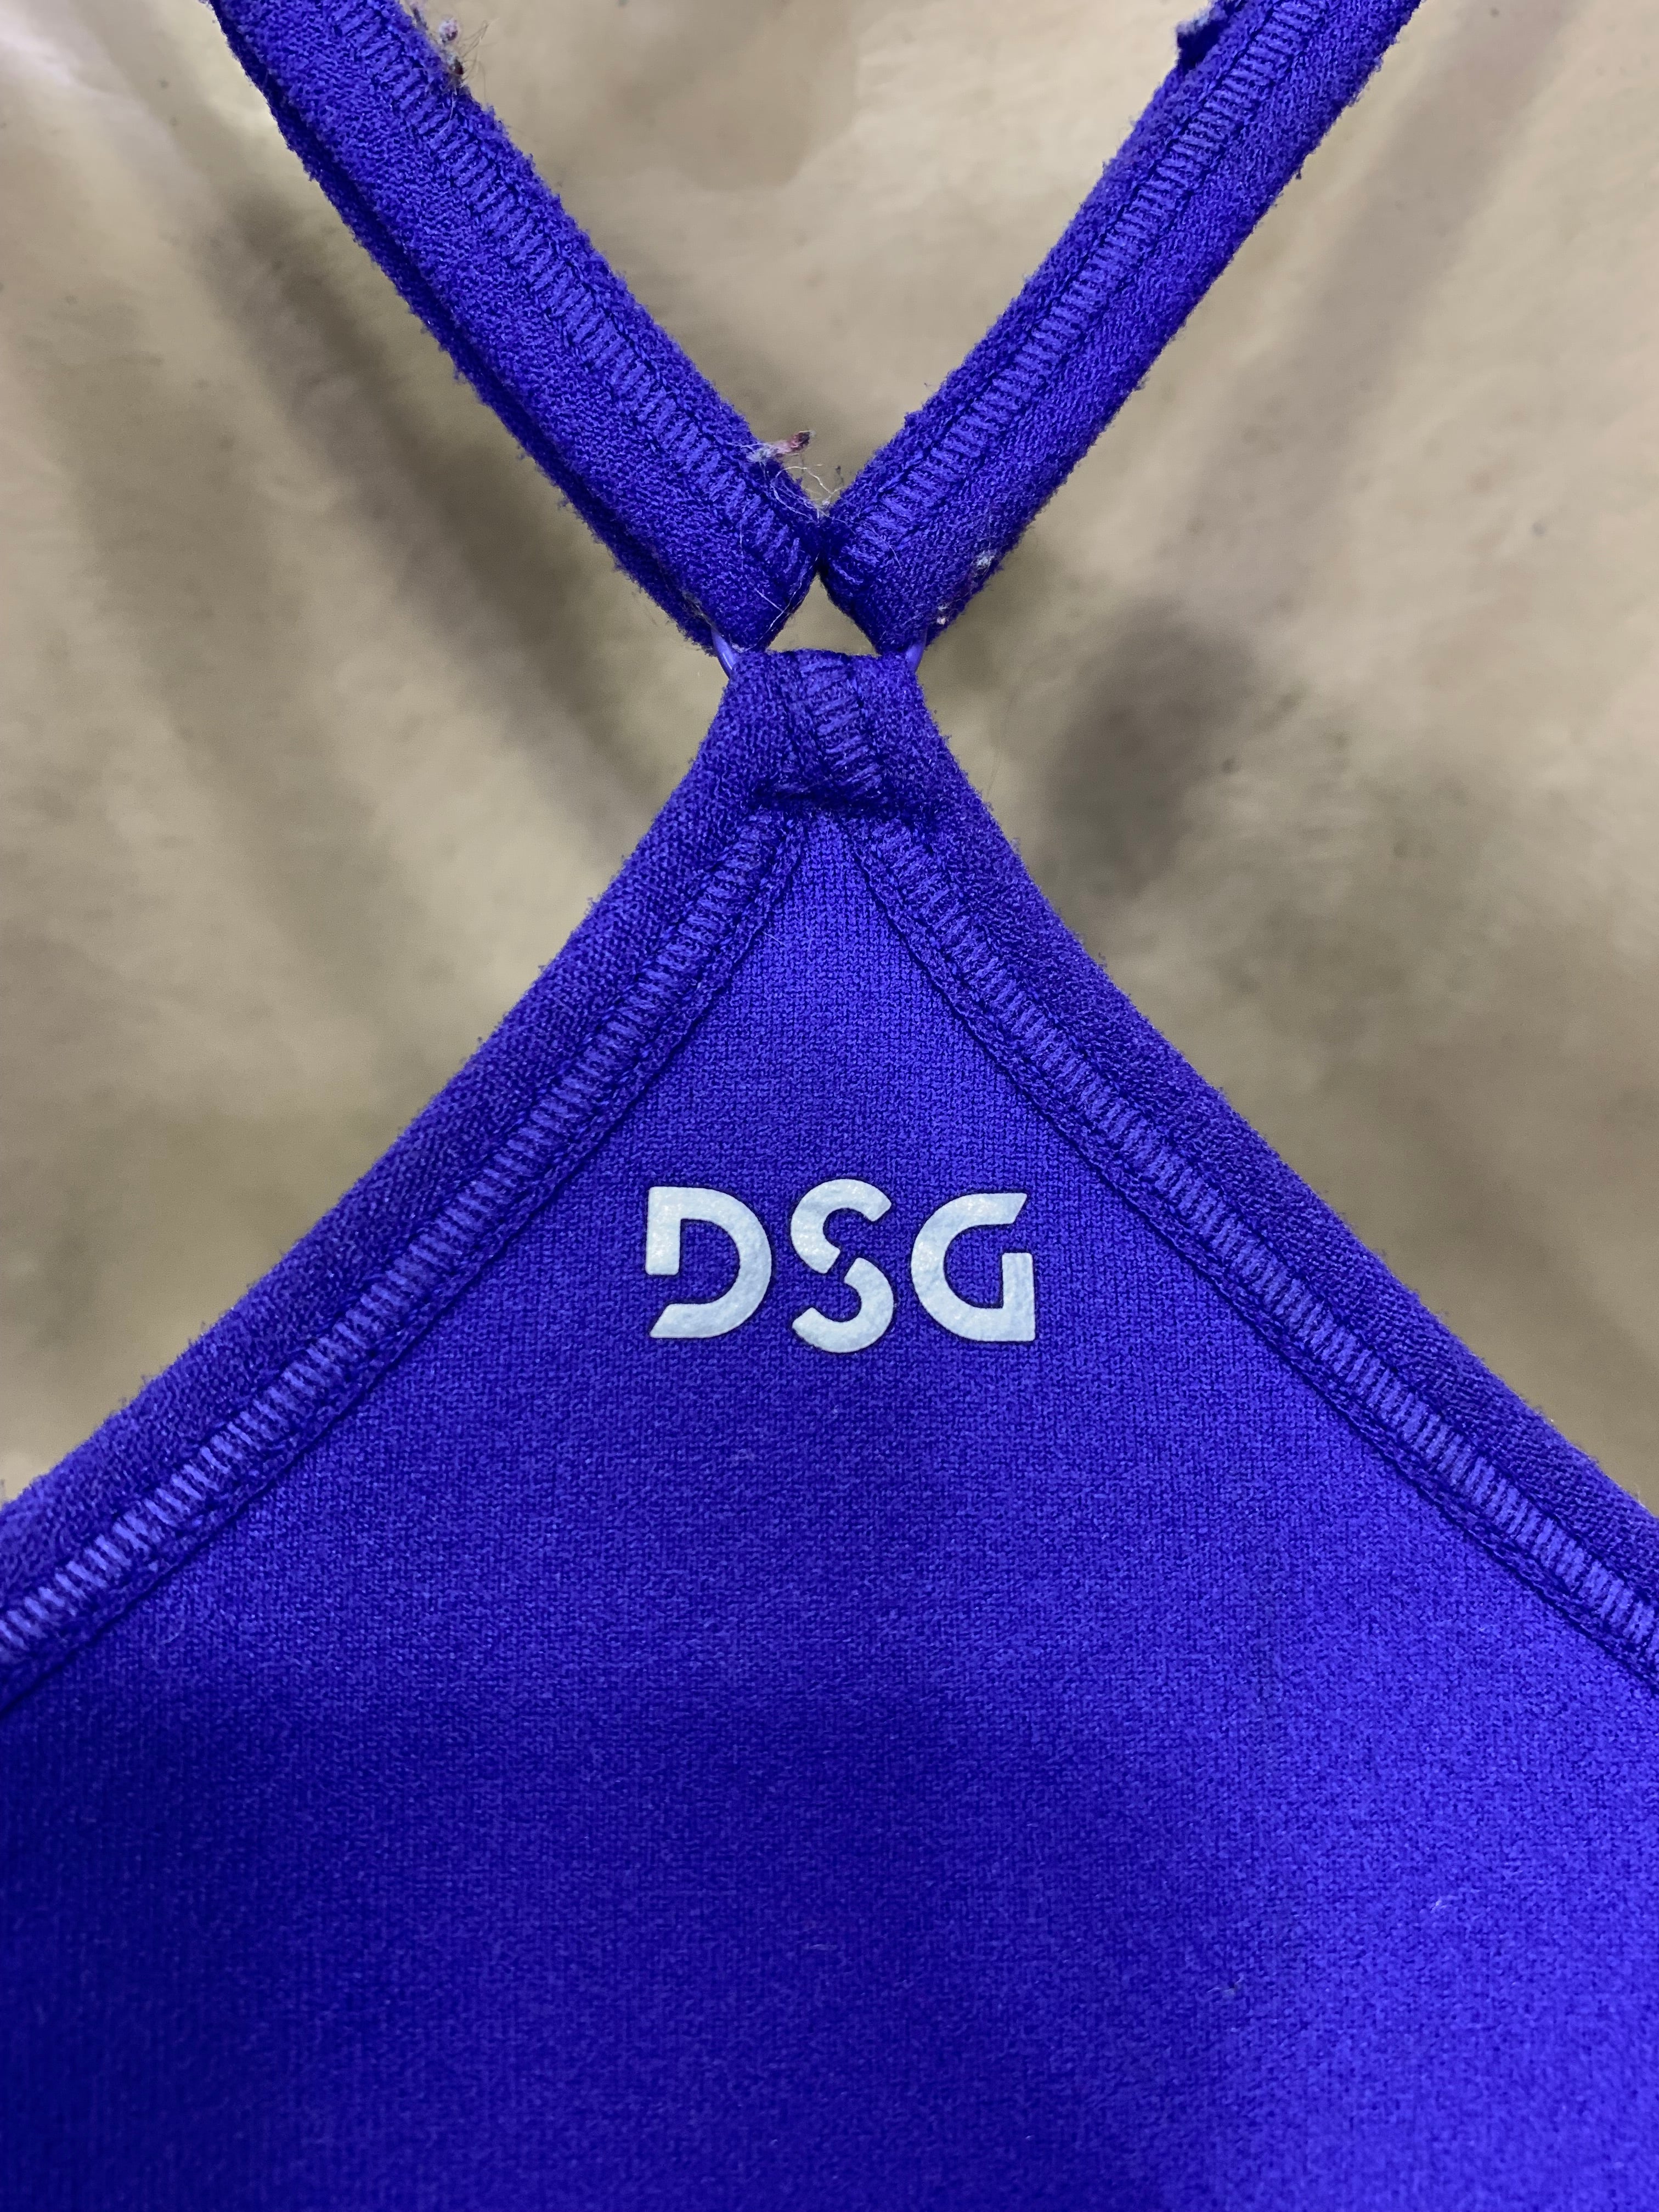 D&G Branded Original Sports Gym Bra For Women